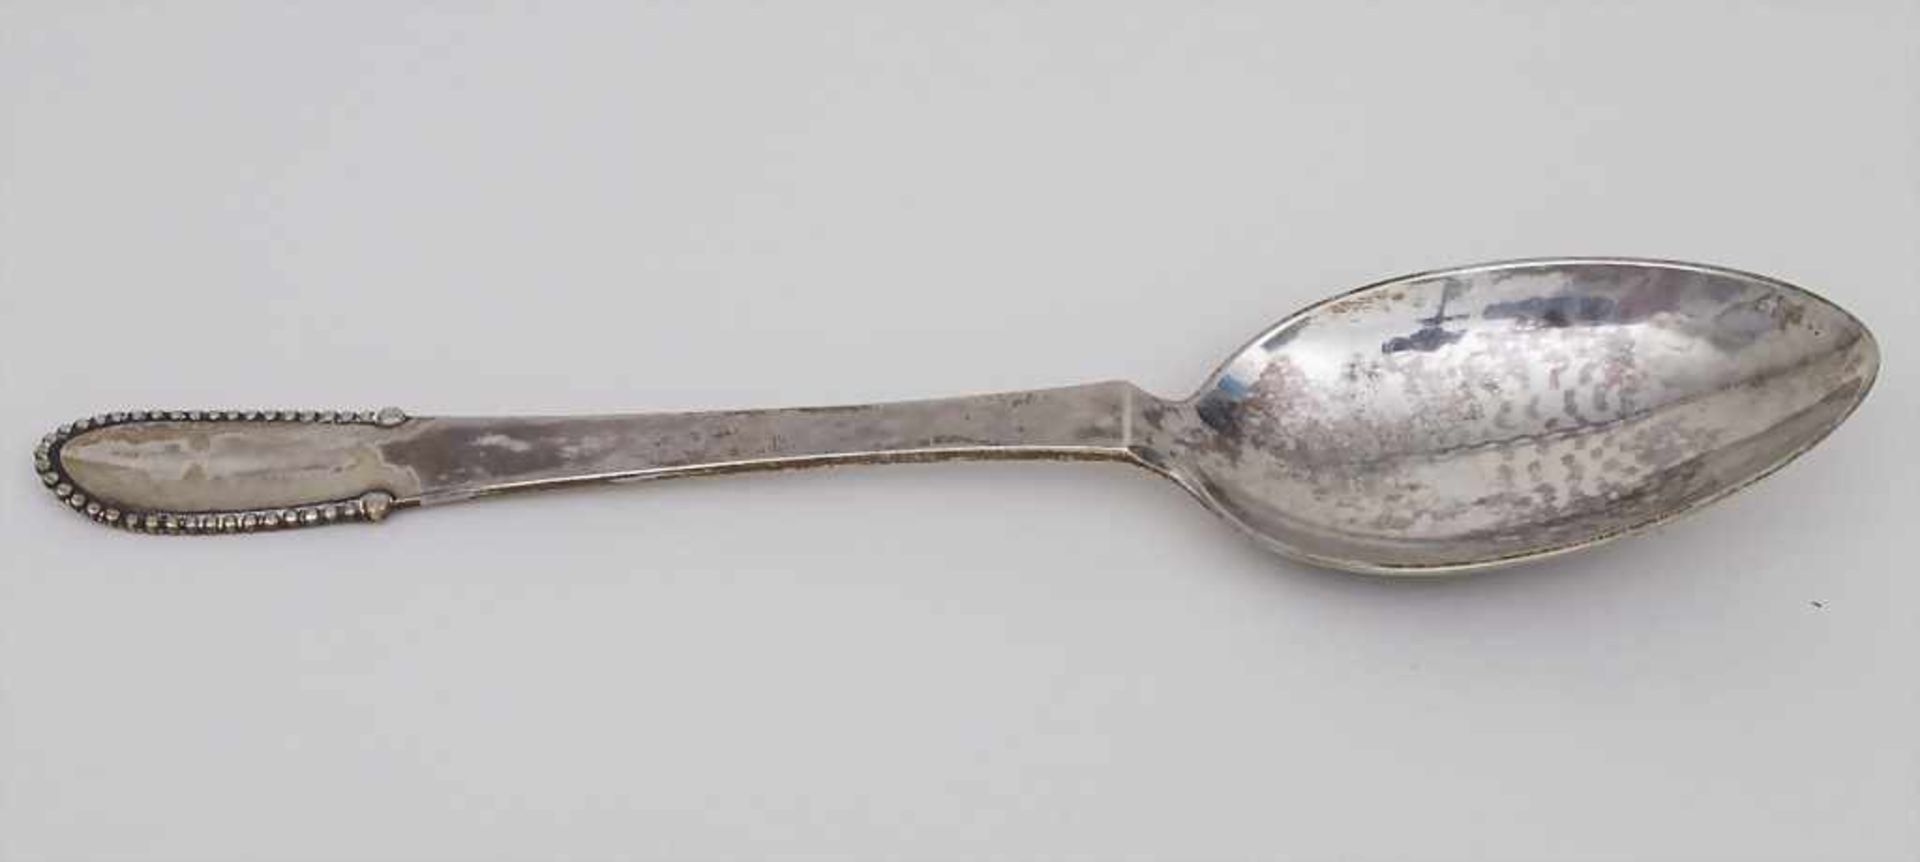 Servierlöffel 'Beaded' / A serving spoon 'Beaded', Christian F. Heise für Georg Jensen,